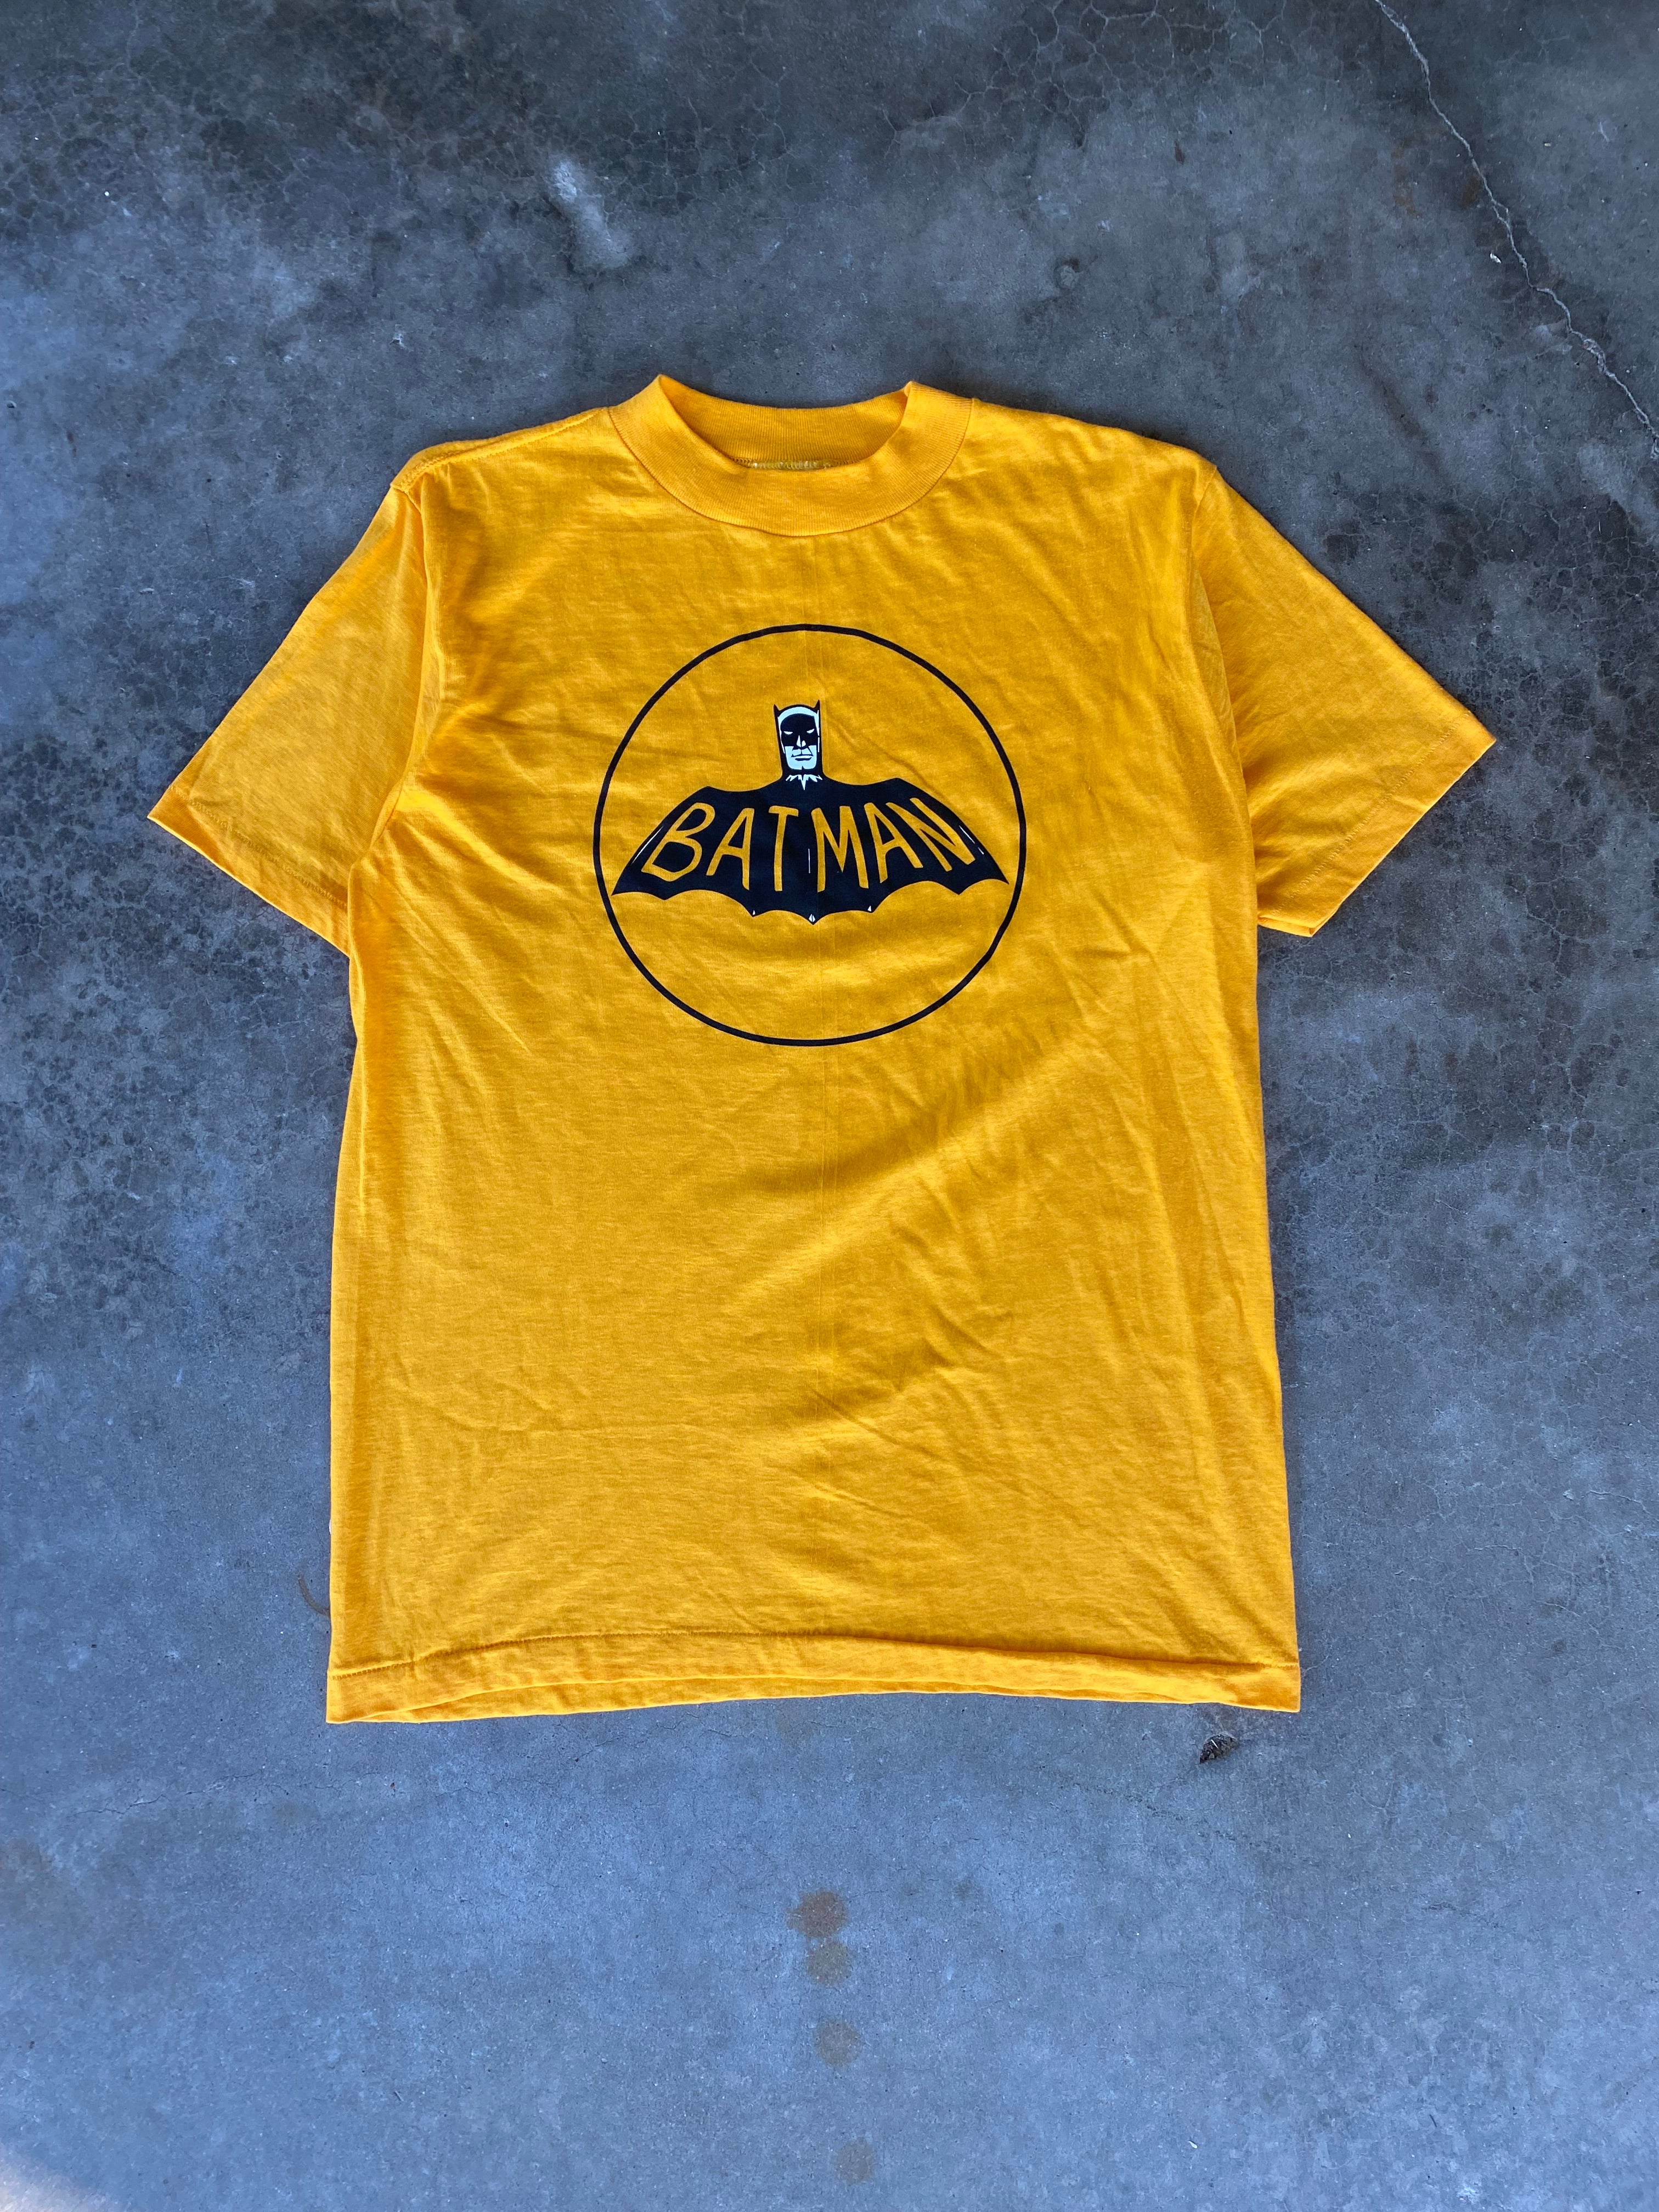 1980s Batman T-Shirt (M)